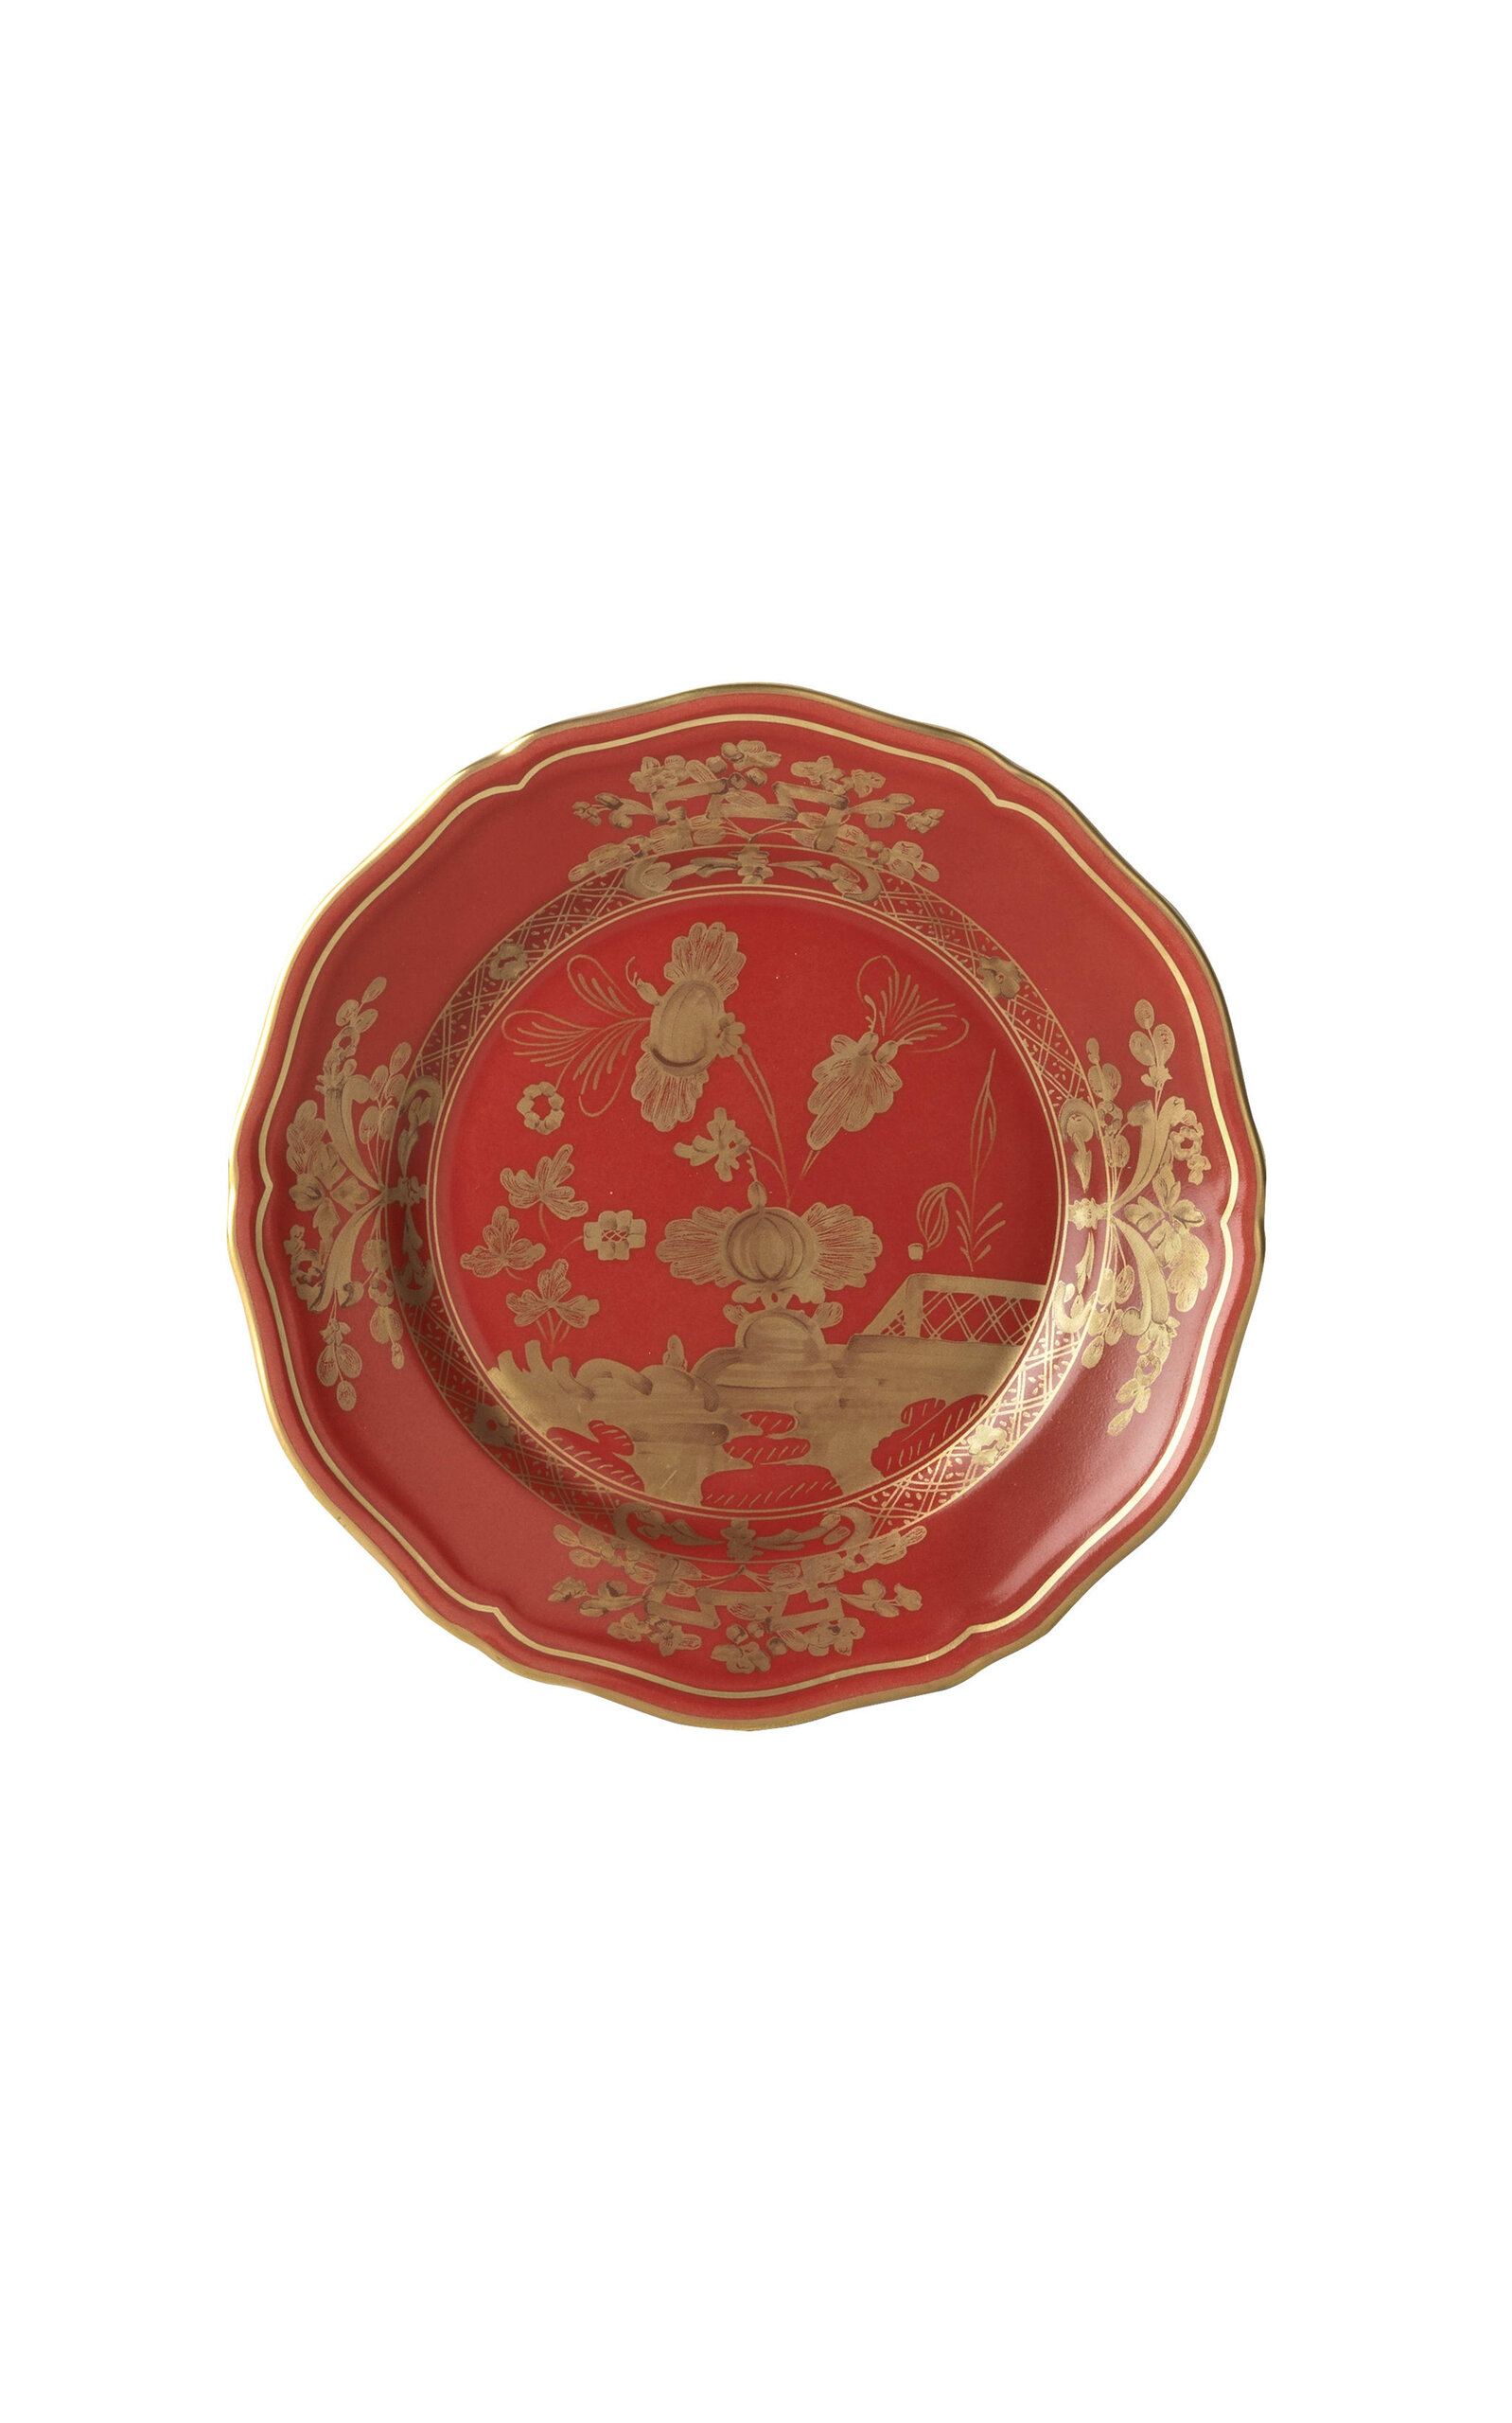 Ginori 1735 Antico Doccia Porcelain Flat Bread Plate In Red